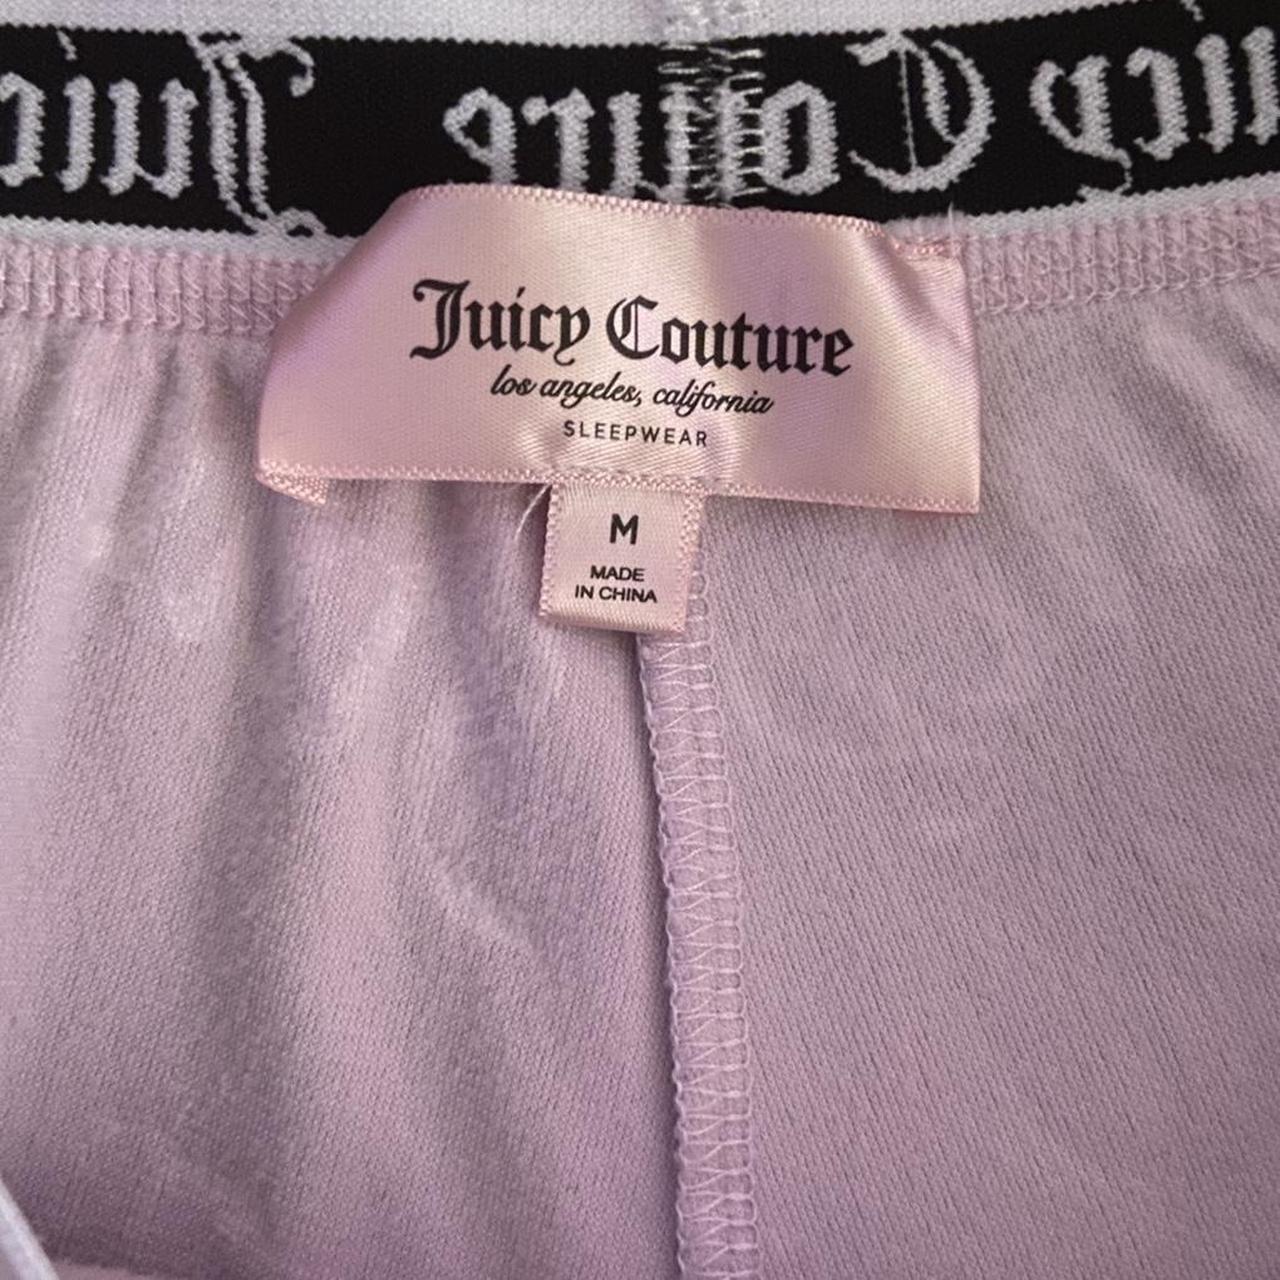 Juicy Couture Pink sleep shorts !! Crown Designs :)